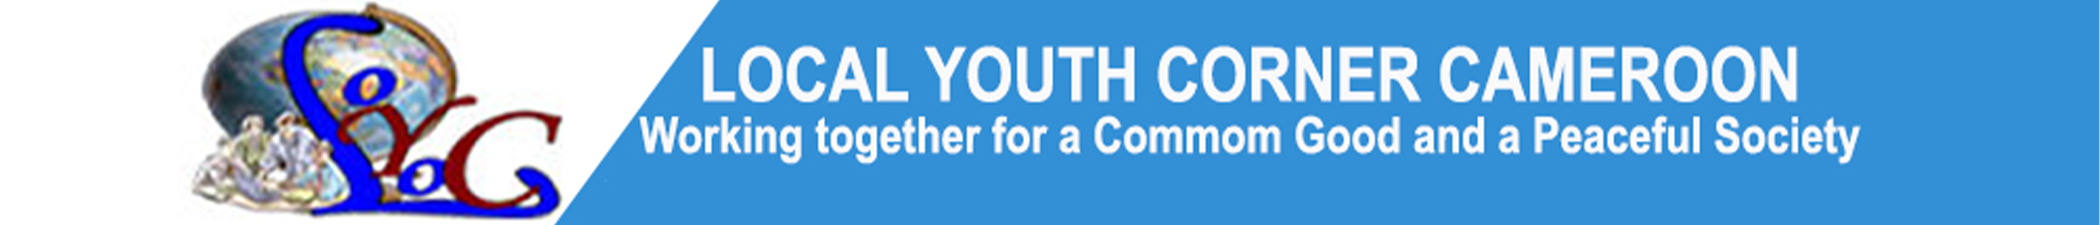 LOCAL YOUTH CORNER CAMEROON Logo